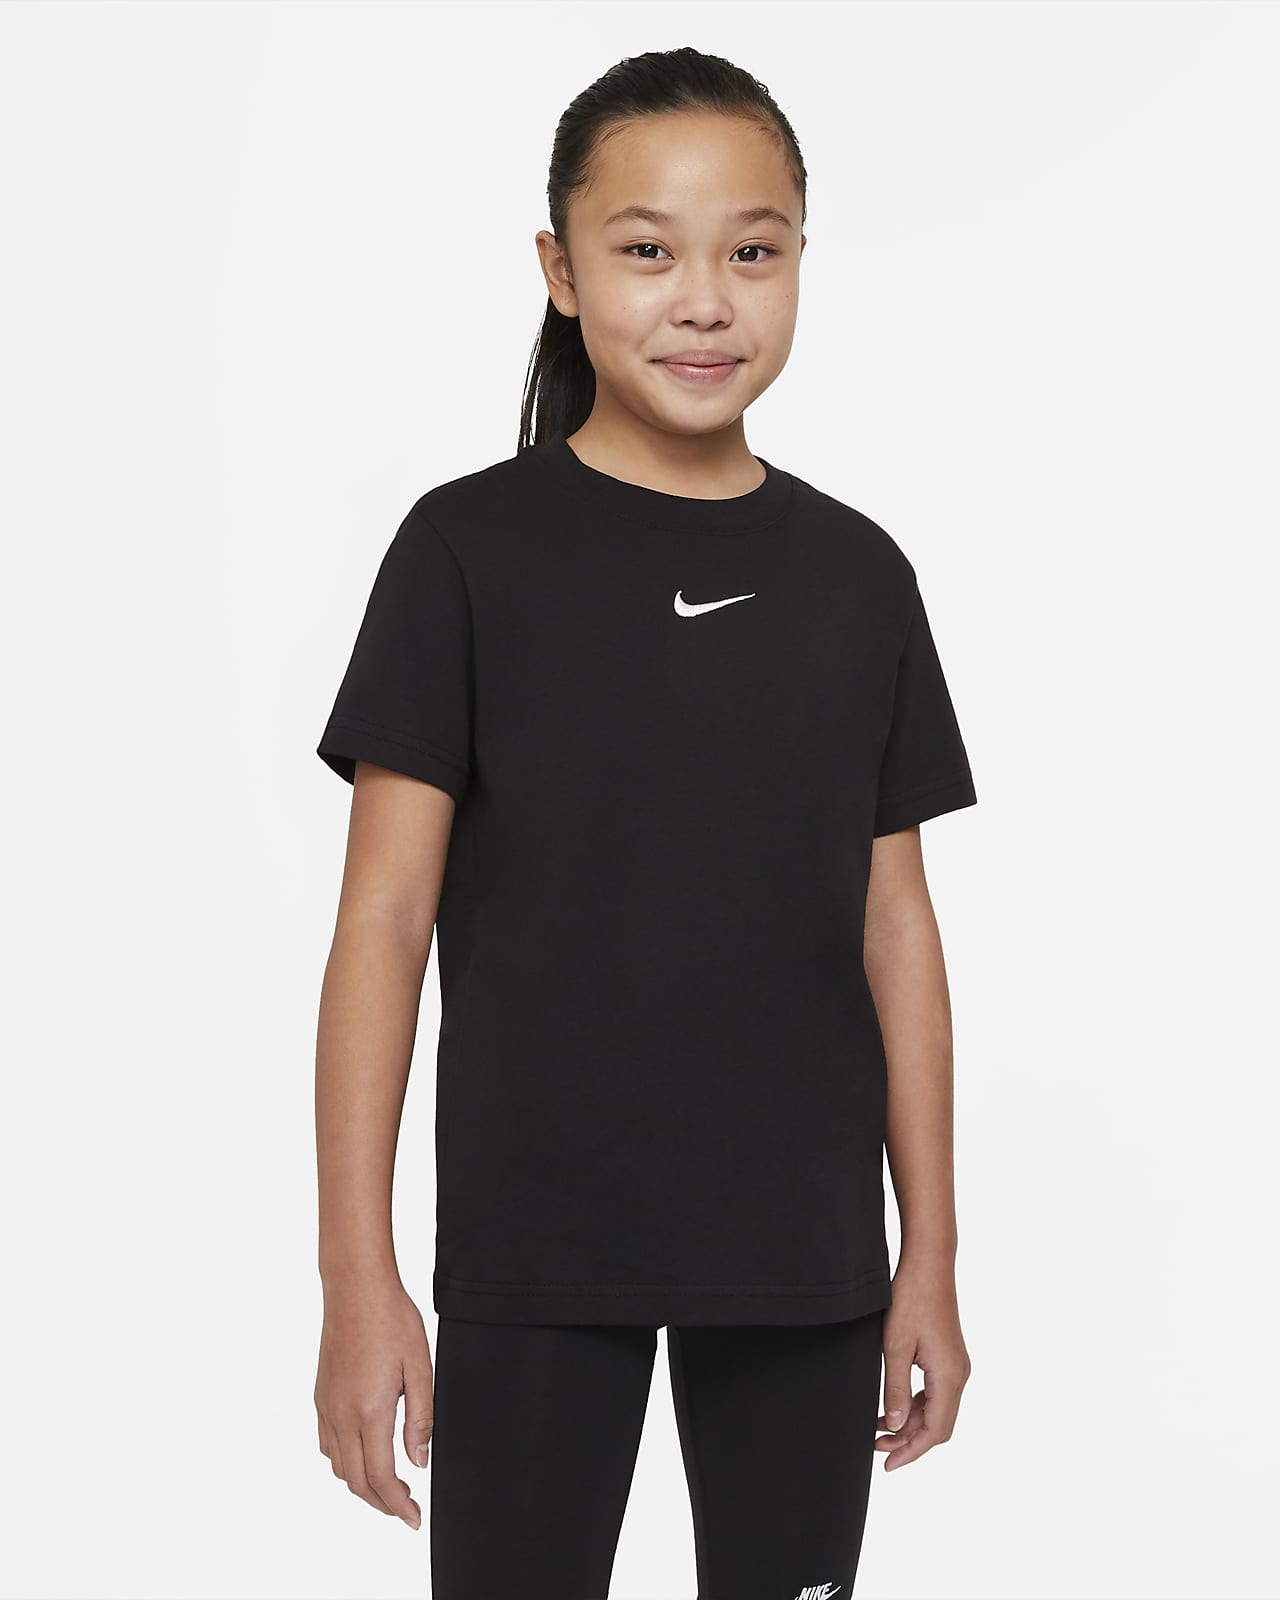 Nike Acg Shirt Shop Official, Save 40% | jlcatj.gob.mx